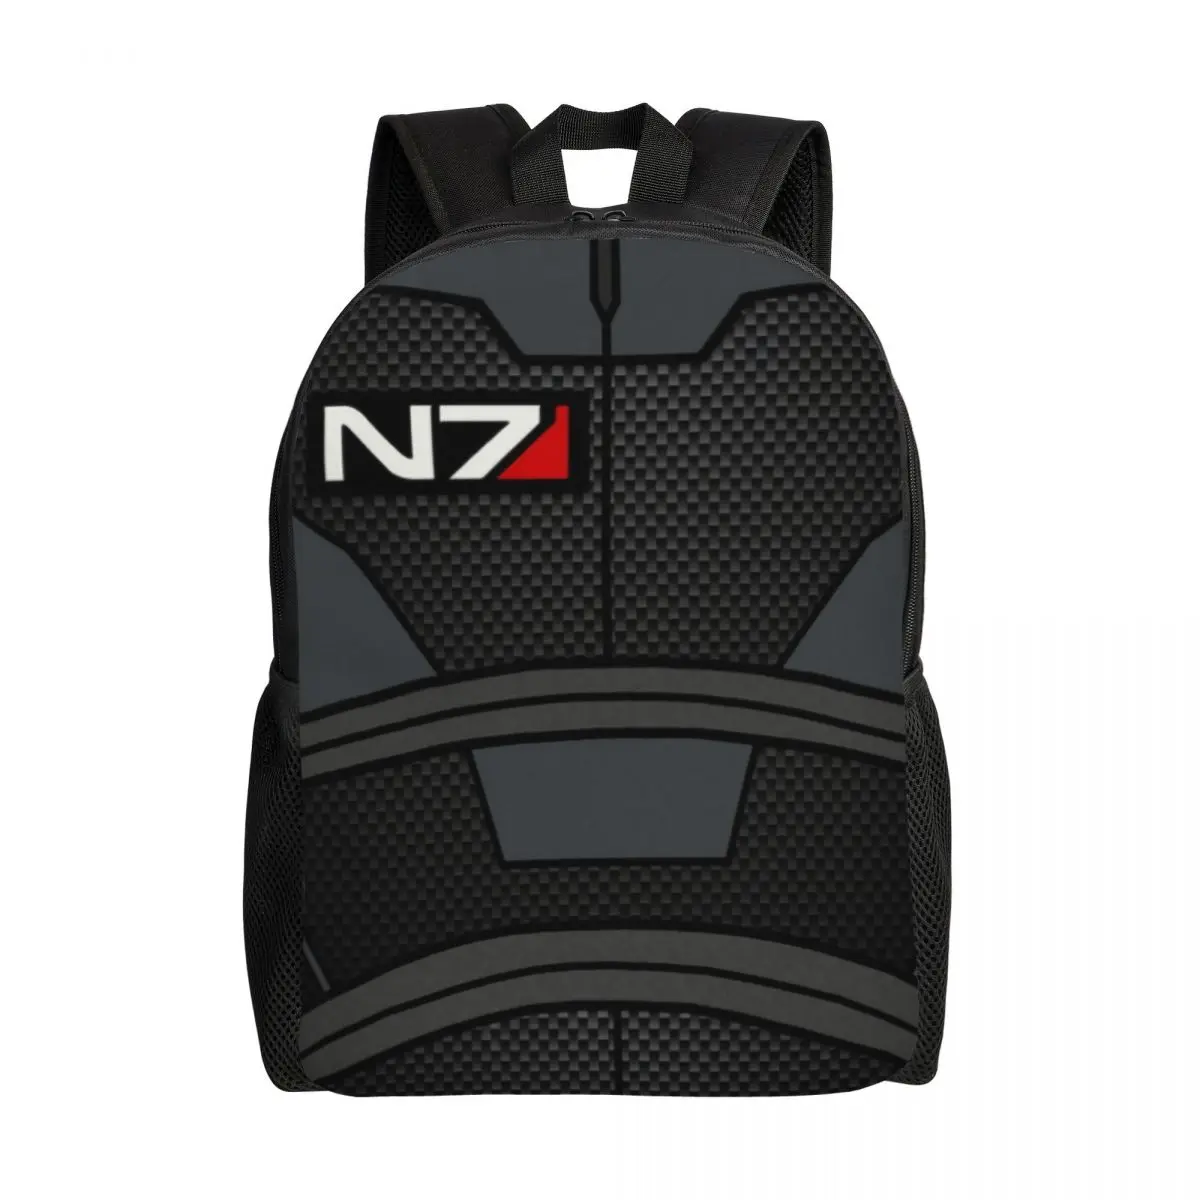 

Mass Effect N7 Armor Travel Backpack Men Women School Laptop Bookbag Alliance Military Video Game College Student Daypack Bags